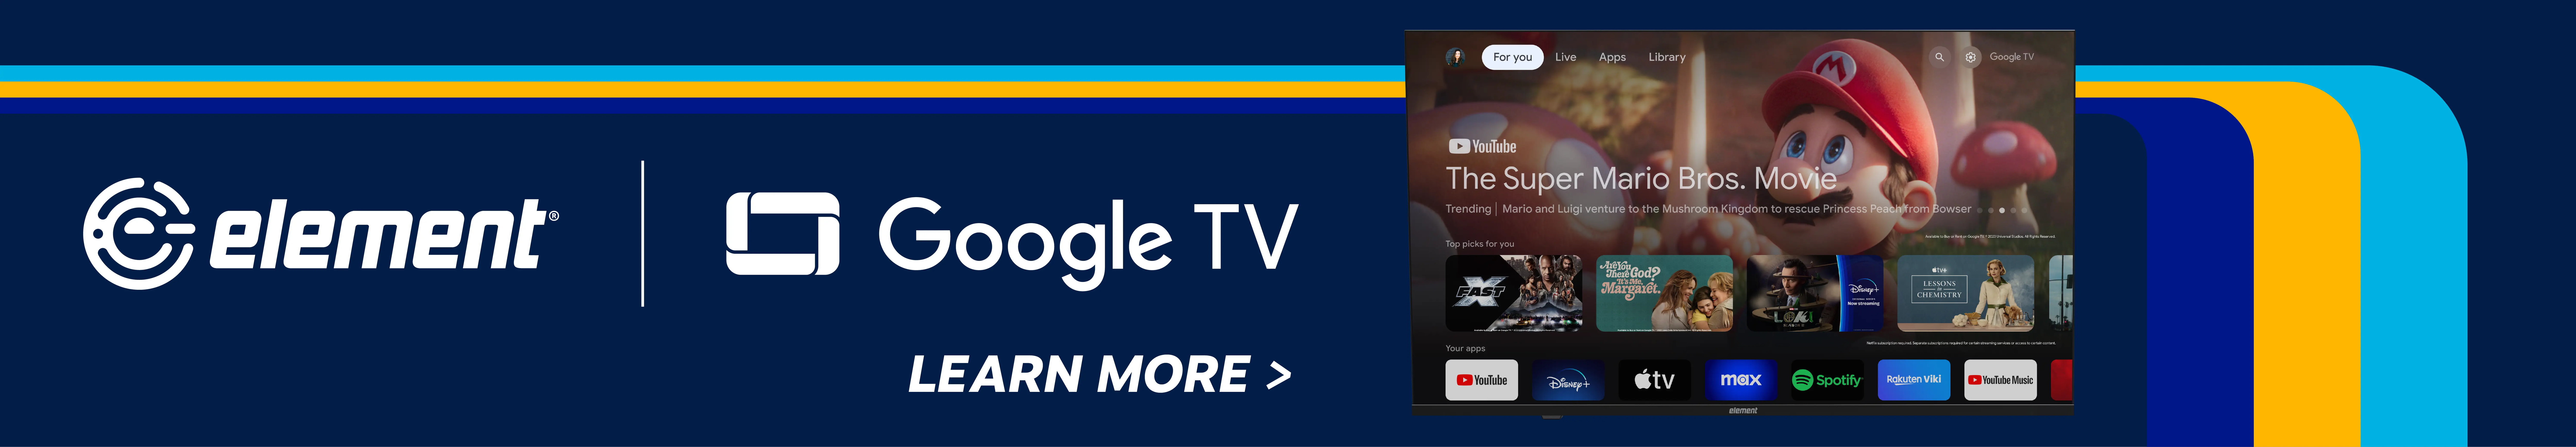 Google TV smart platform